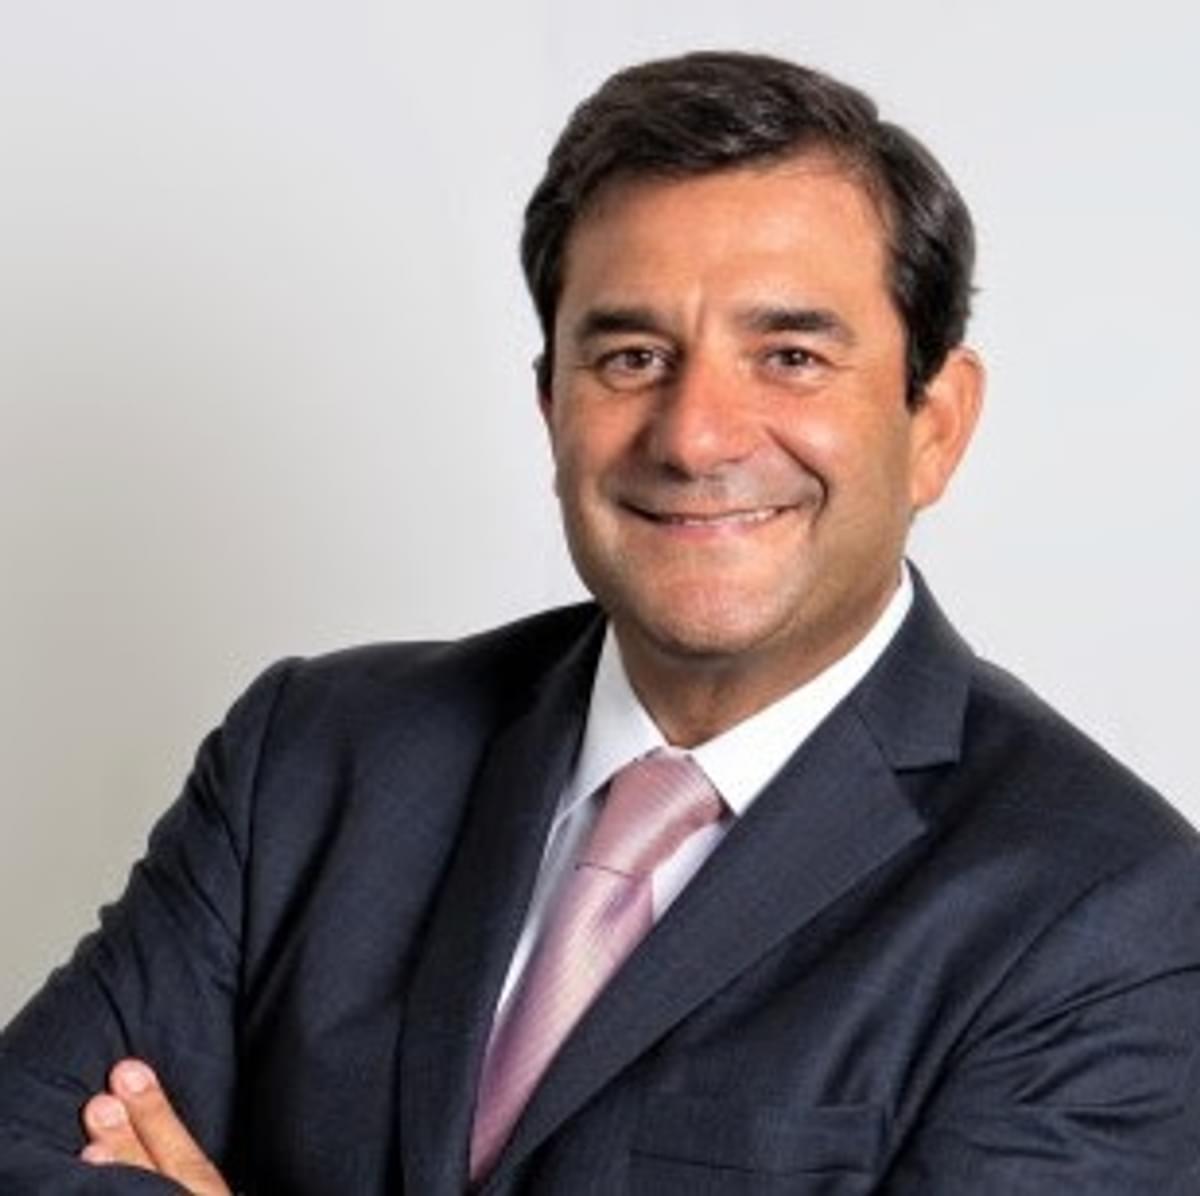 Cesar Cernuda benoemd tot president NetApp image